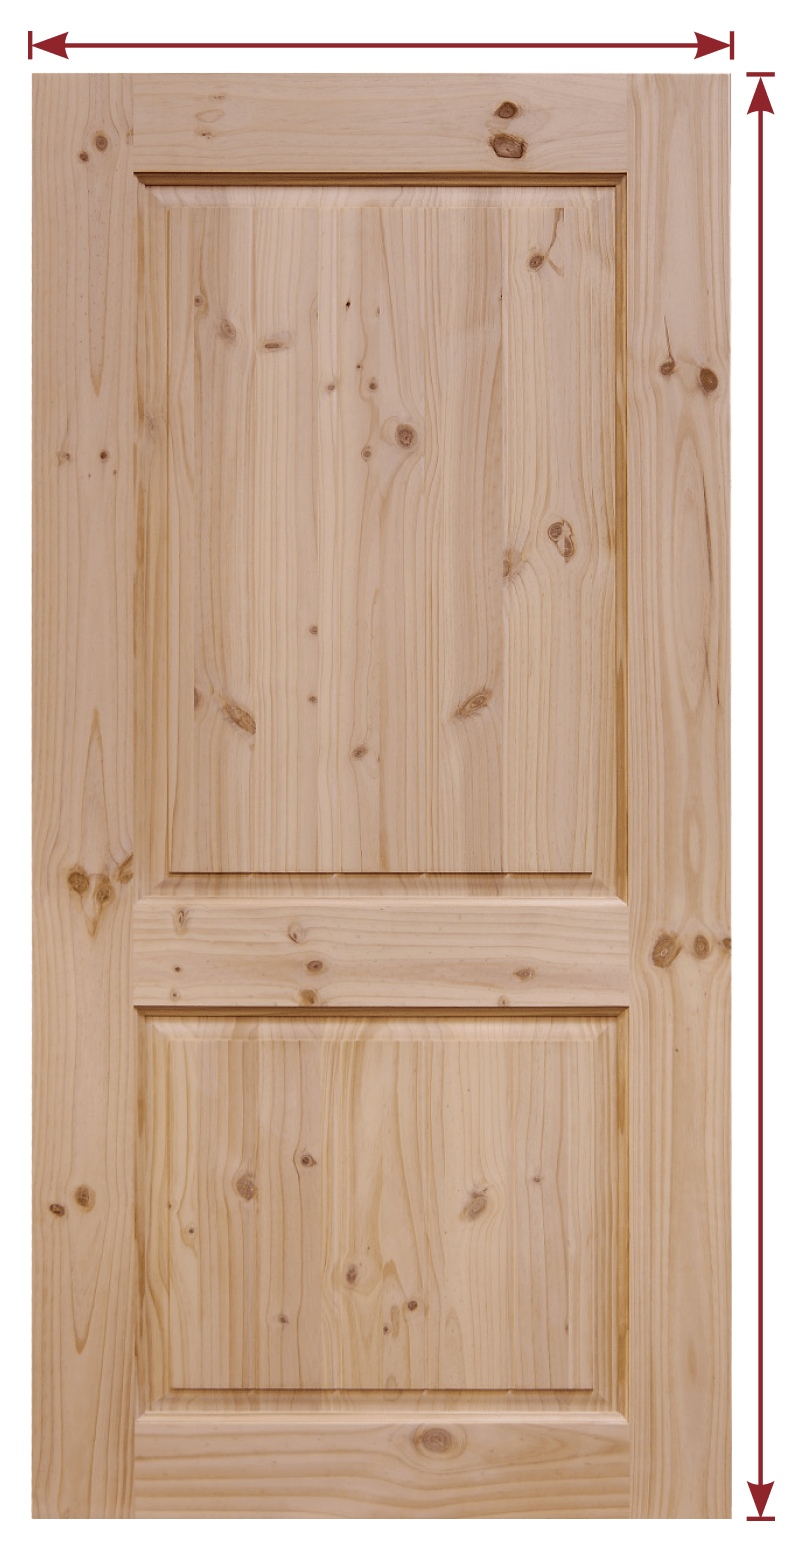 Evermark stile rail wood doors terms 1